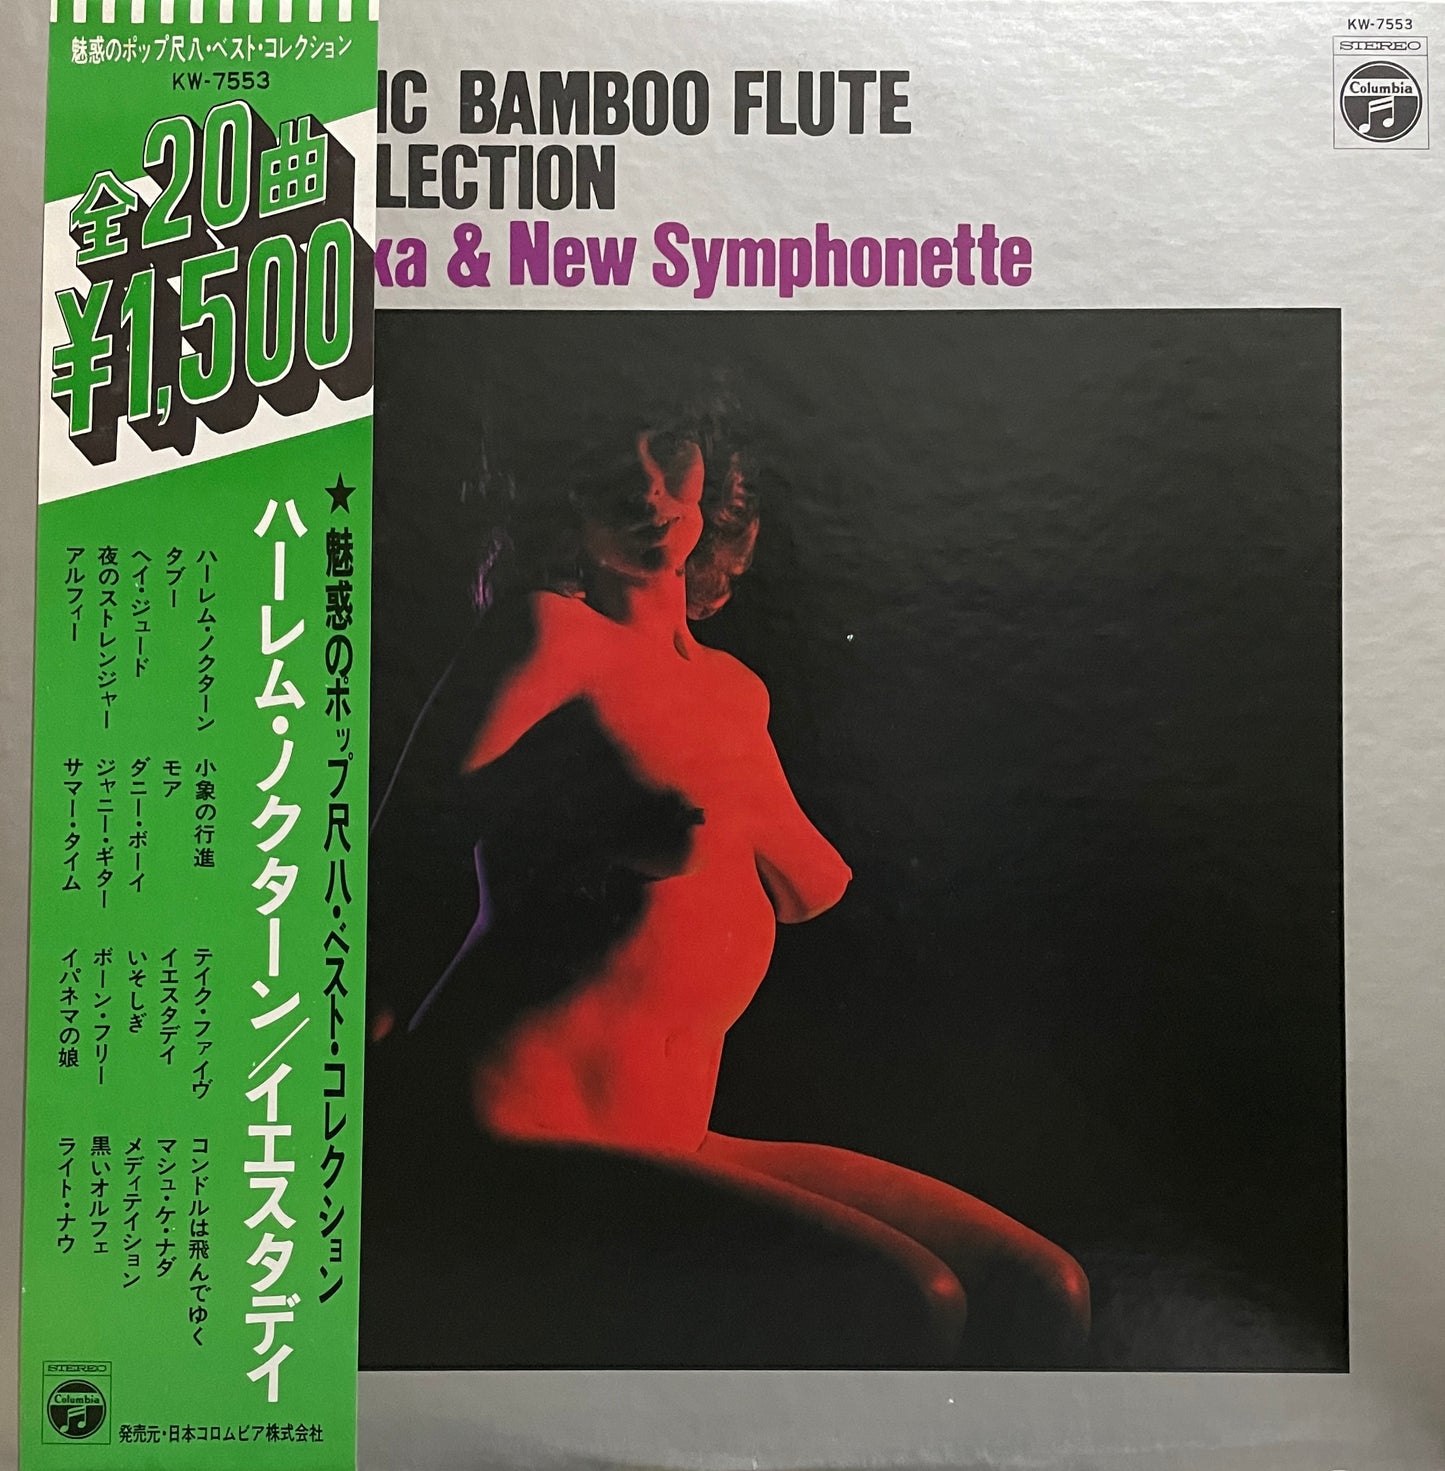 M. Muraoka & New Symphonette "Fantastic Bamboo Flute Best Collection" (1975)